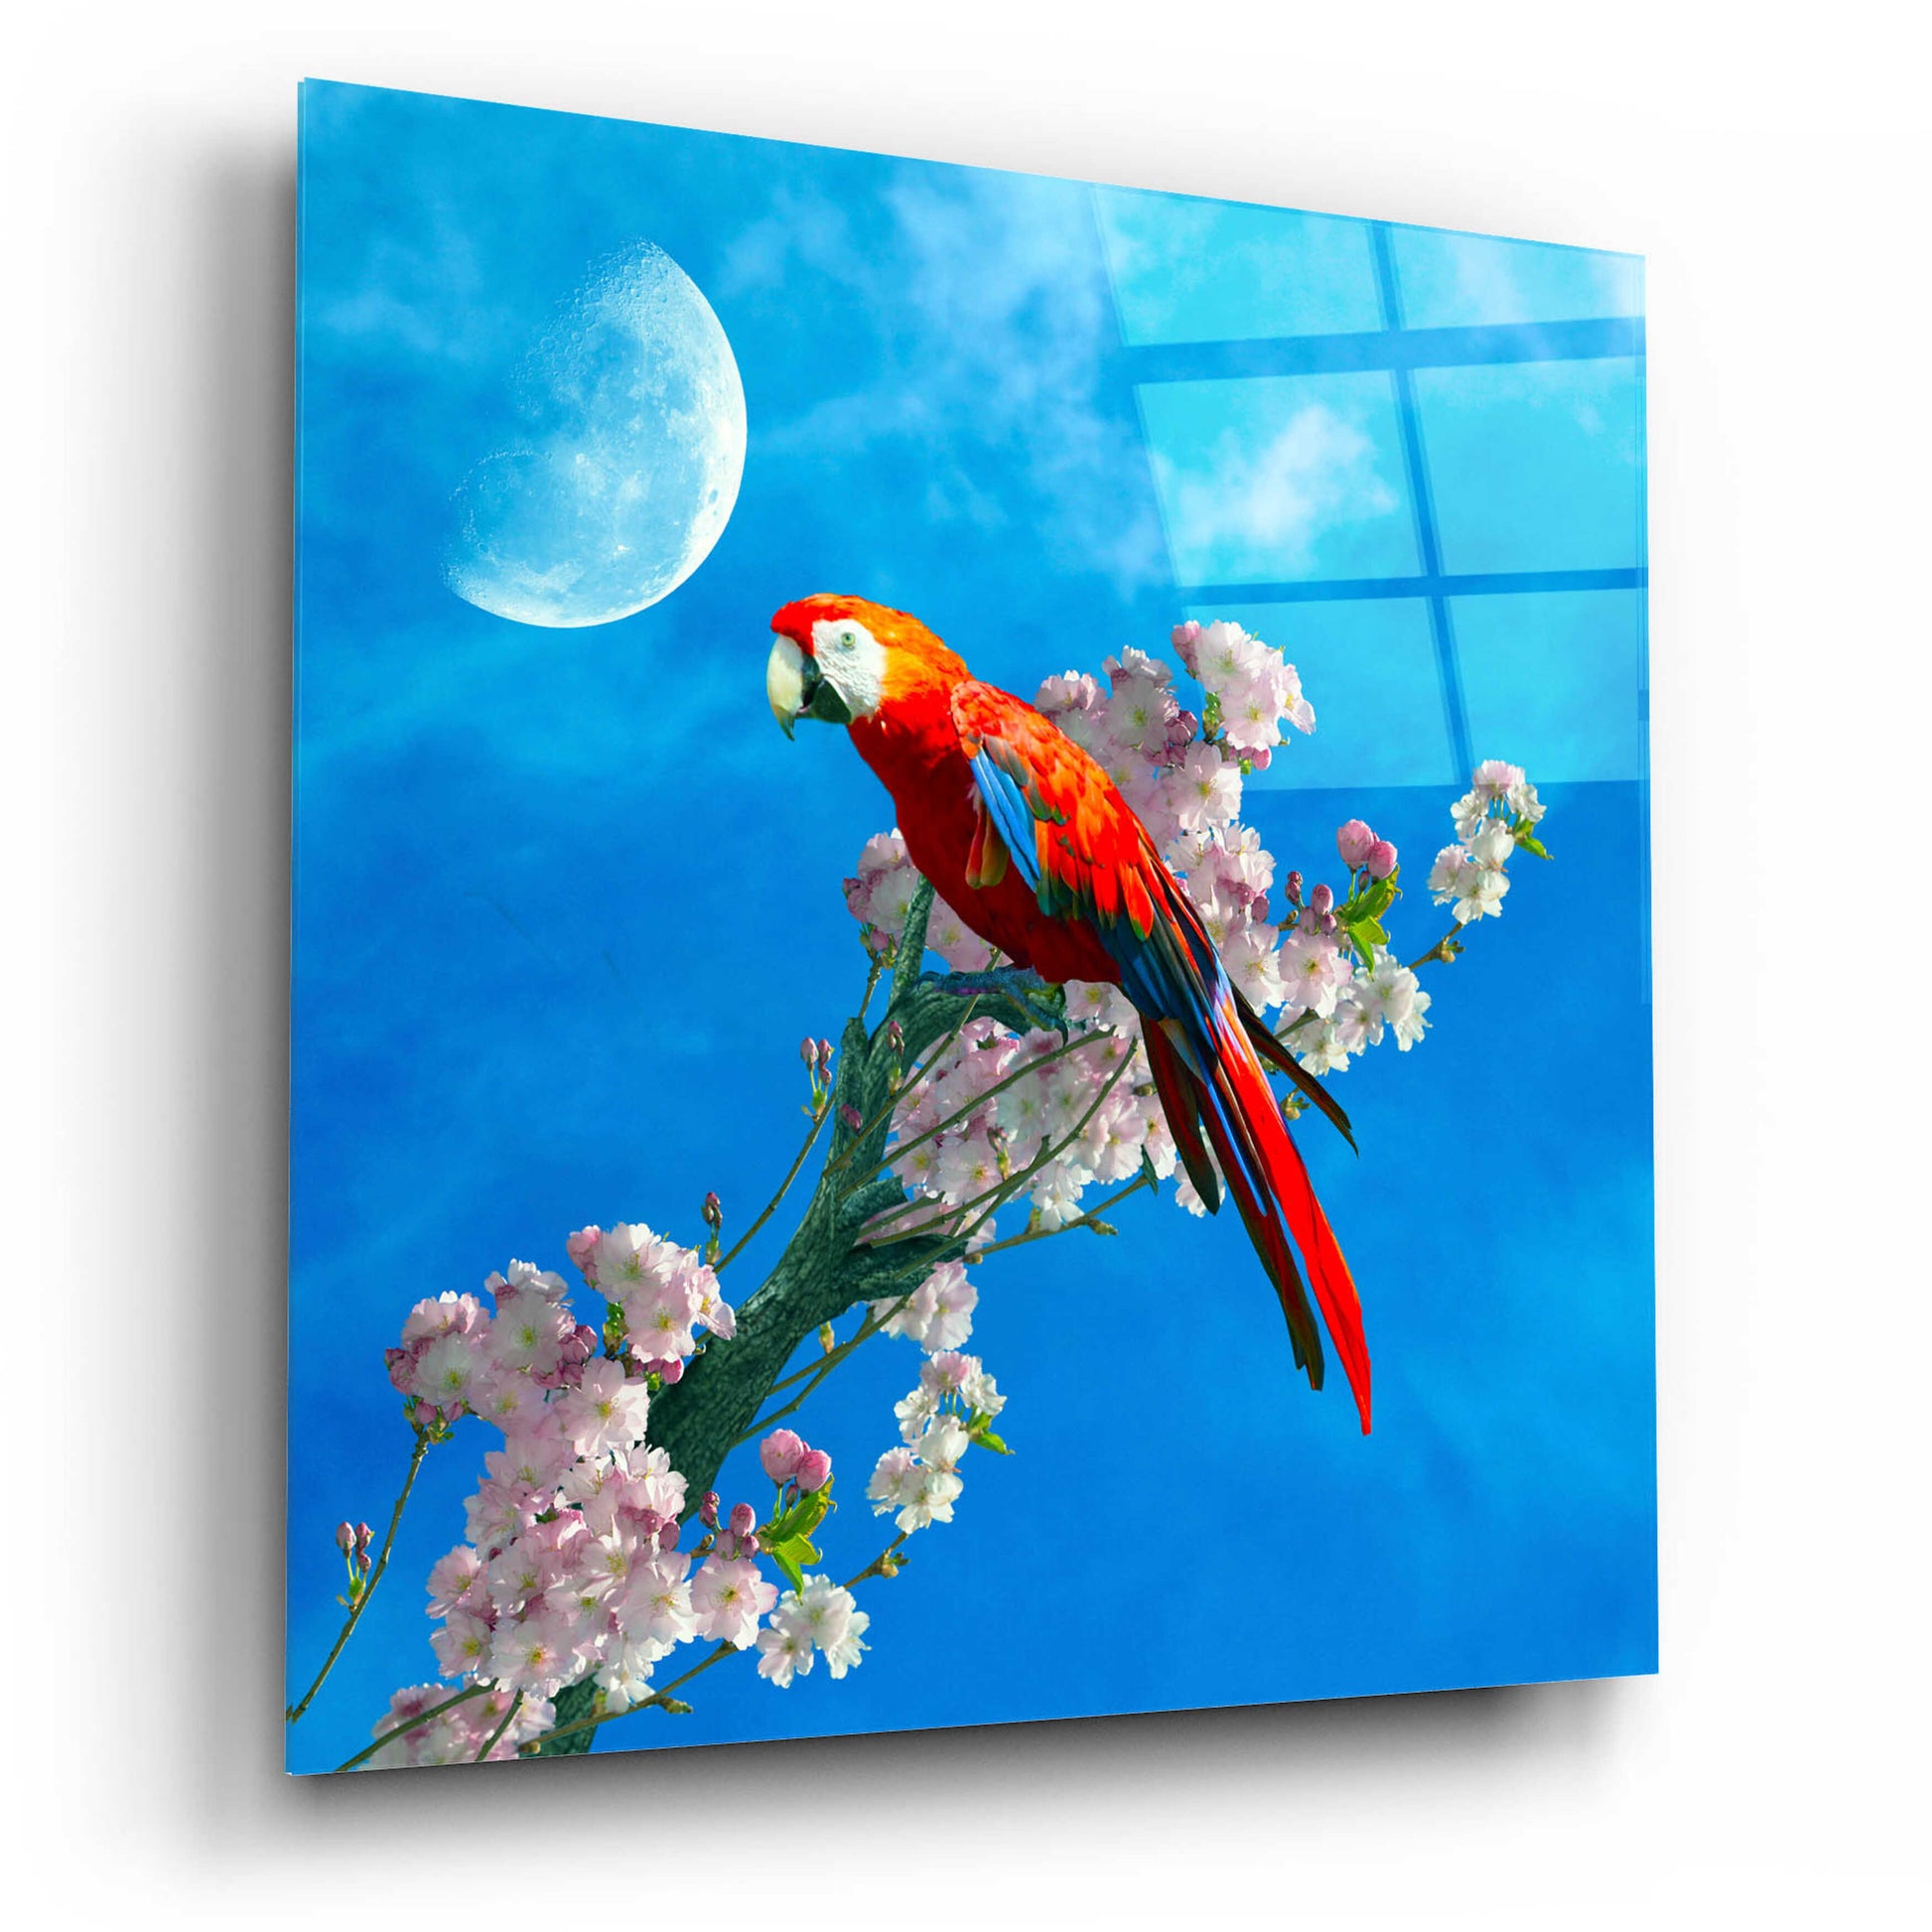 Epic Art 'Red Parrot' by Ata Alishahi, Acrylic Glass Wall Art,12x12